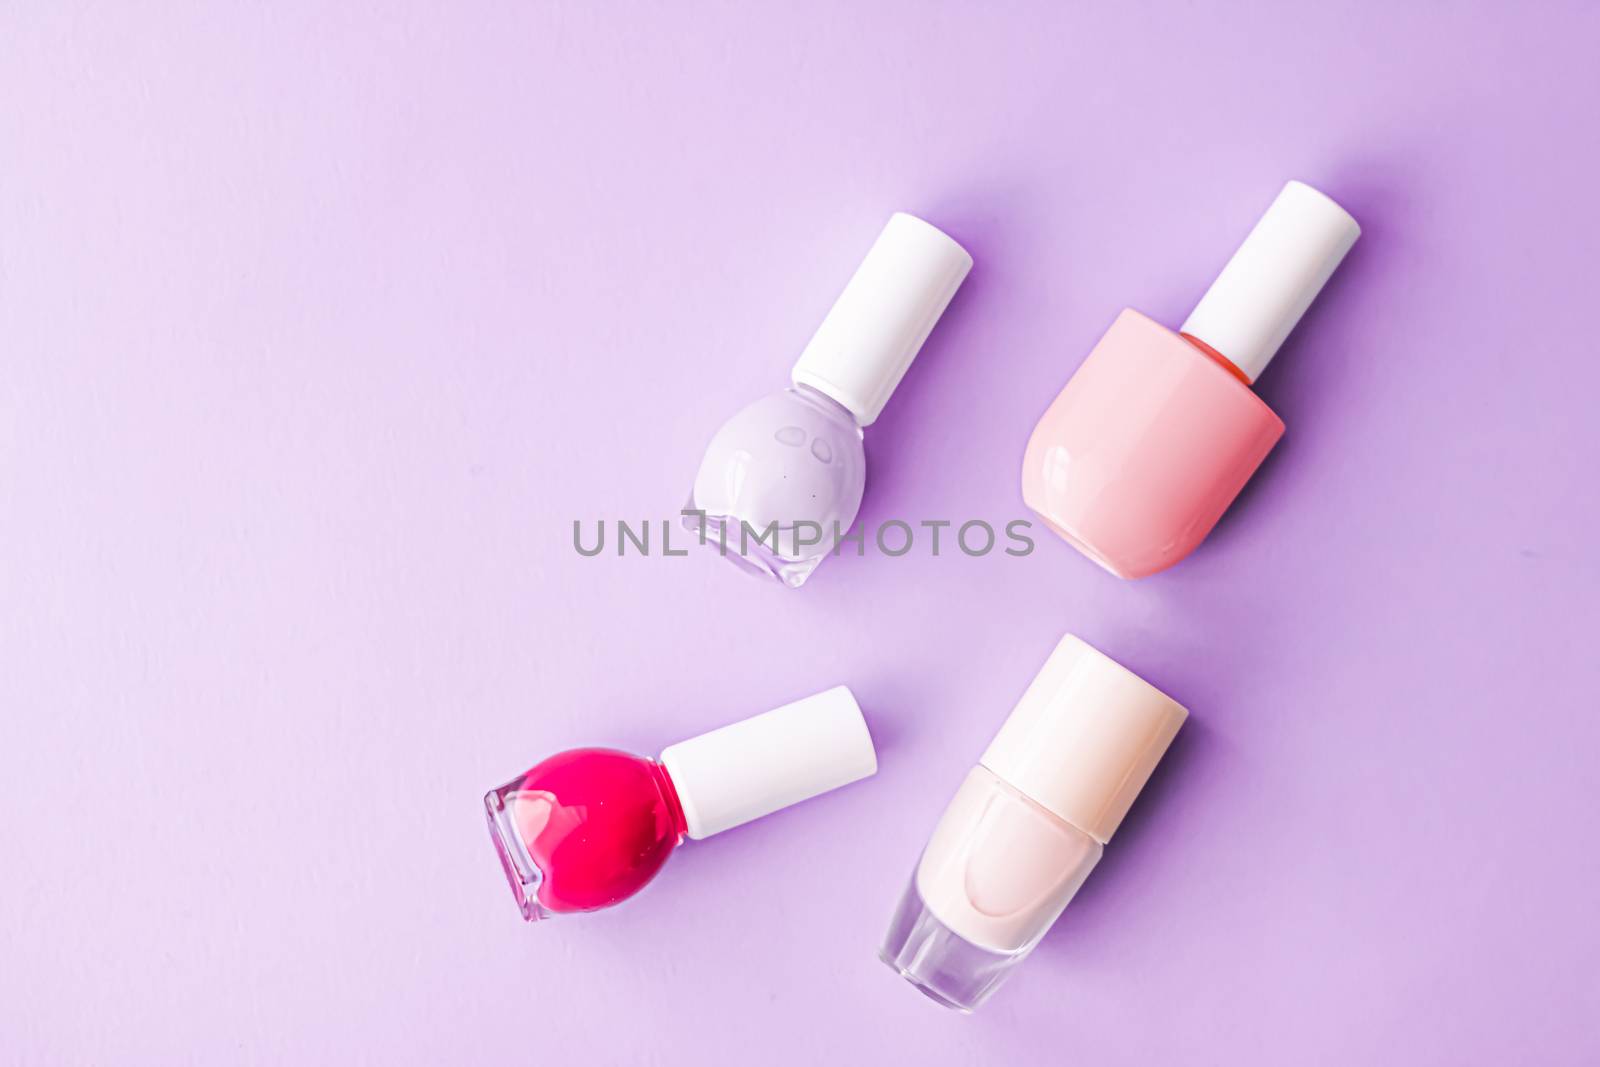 Nail polish bottles on purple background, beauty brand by Anneleven